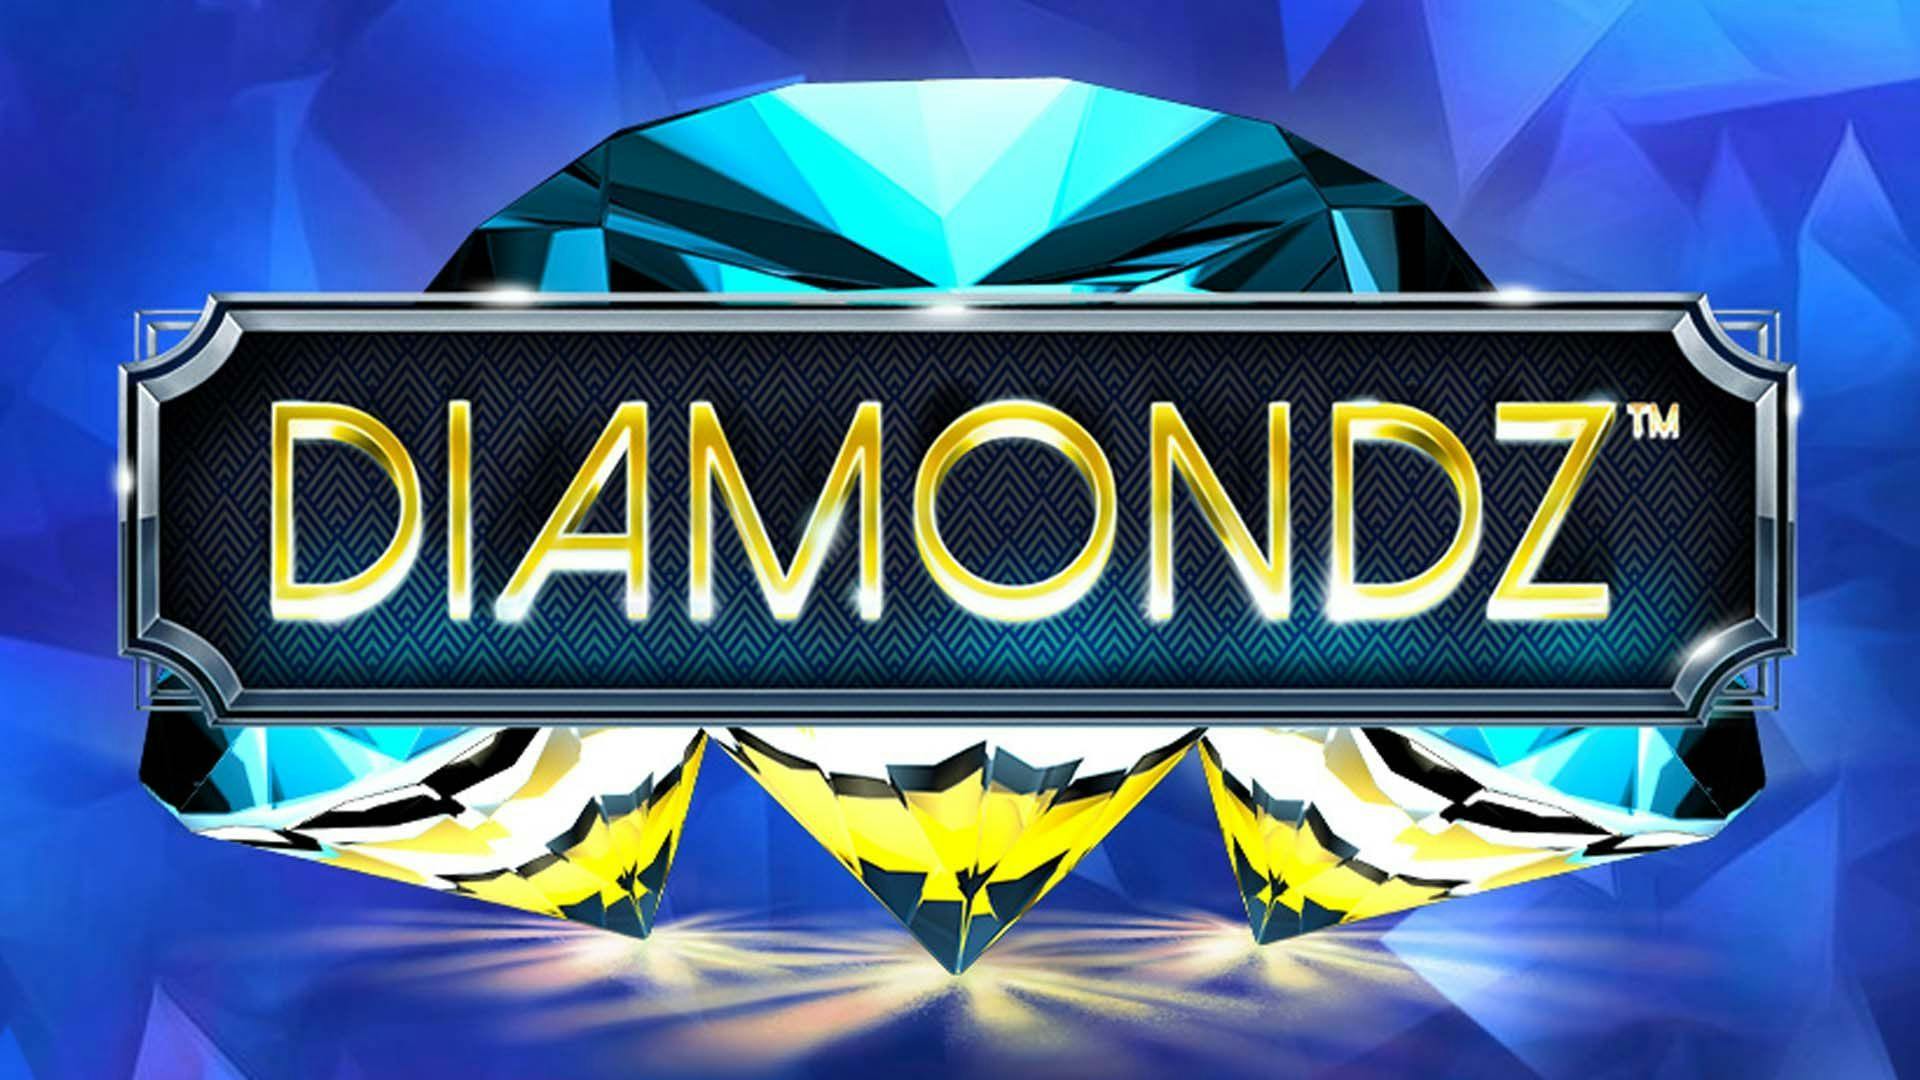 DiamondZ Slot Online Free Game Play